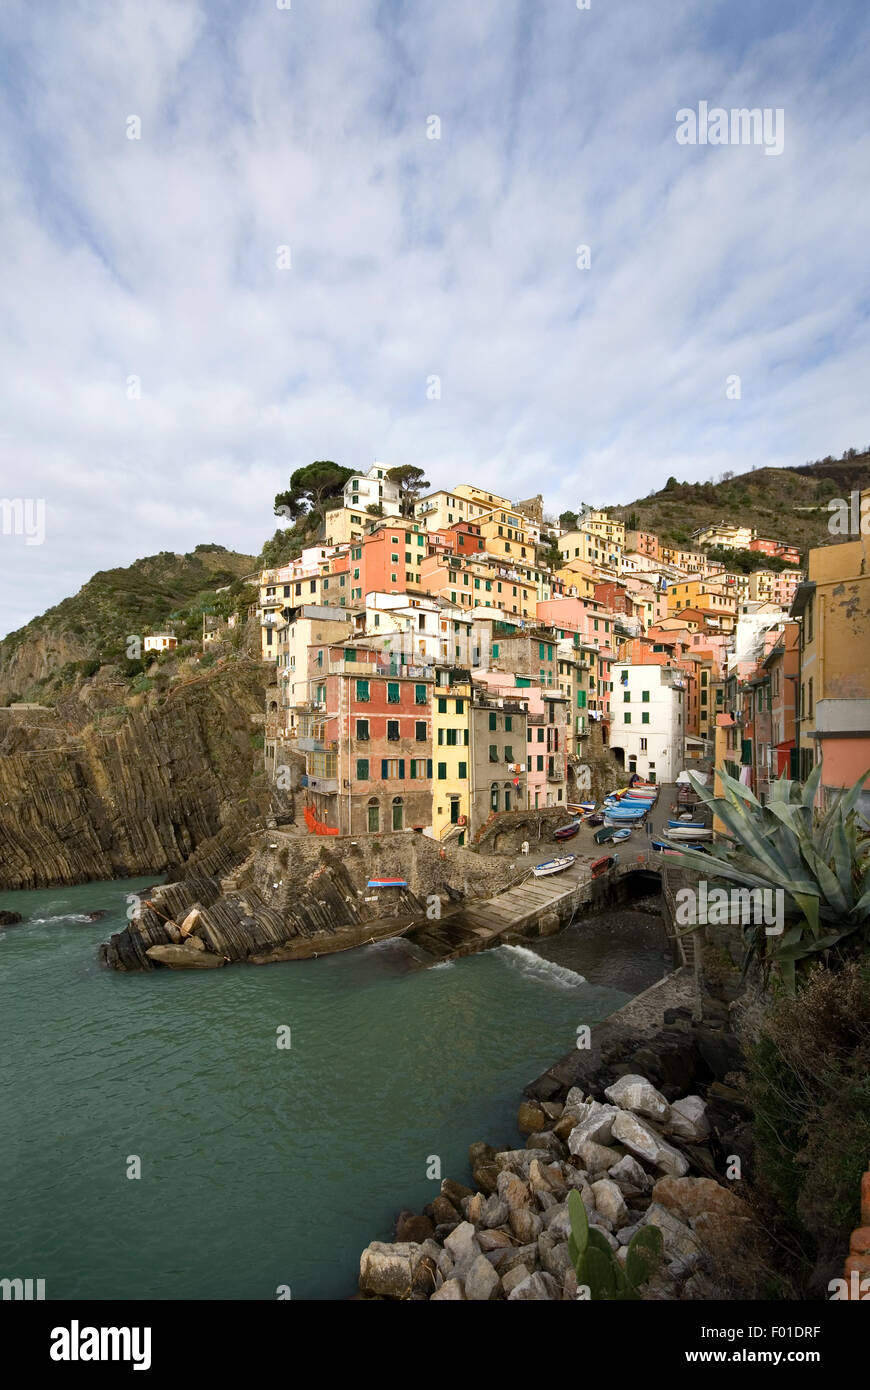 The picturesque village of Riomaggiore, in the Cinque Terre National Park, Italy Stock Photo